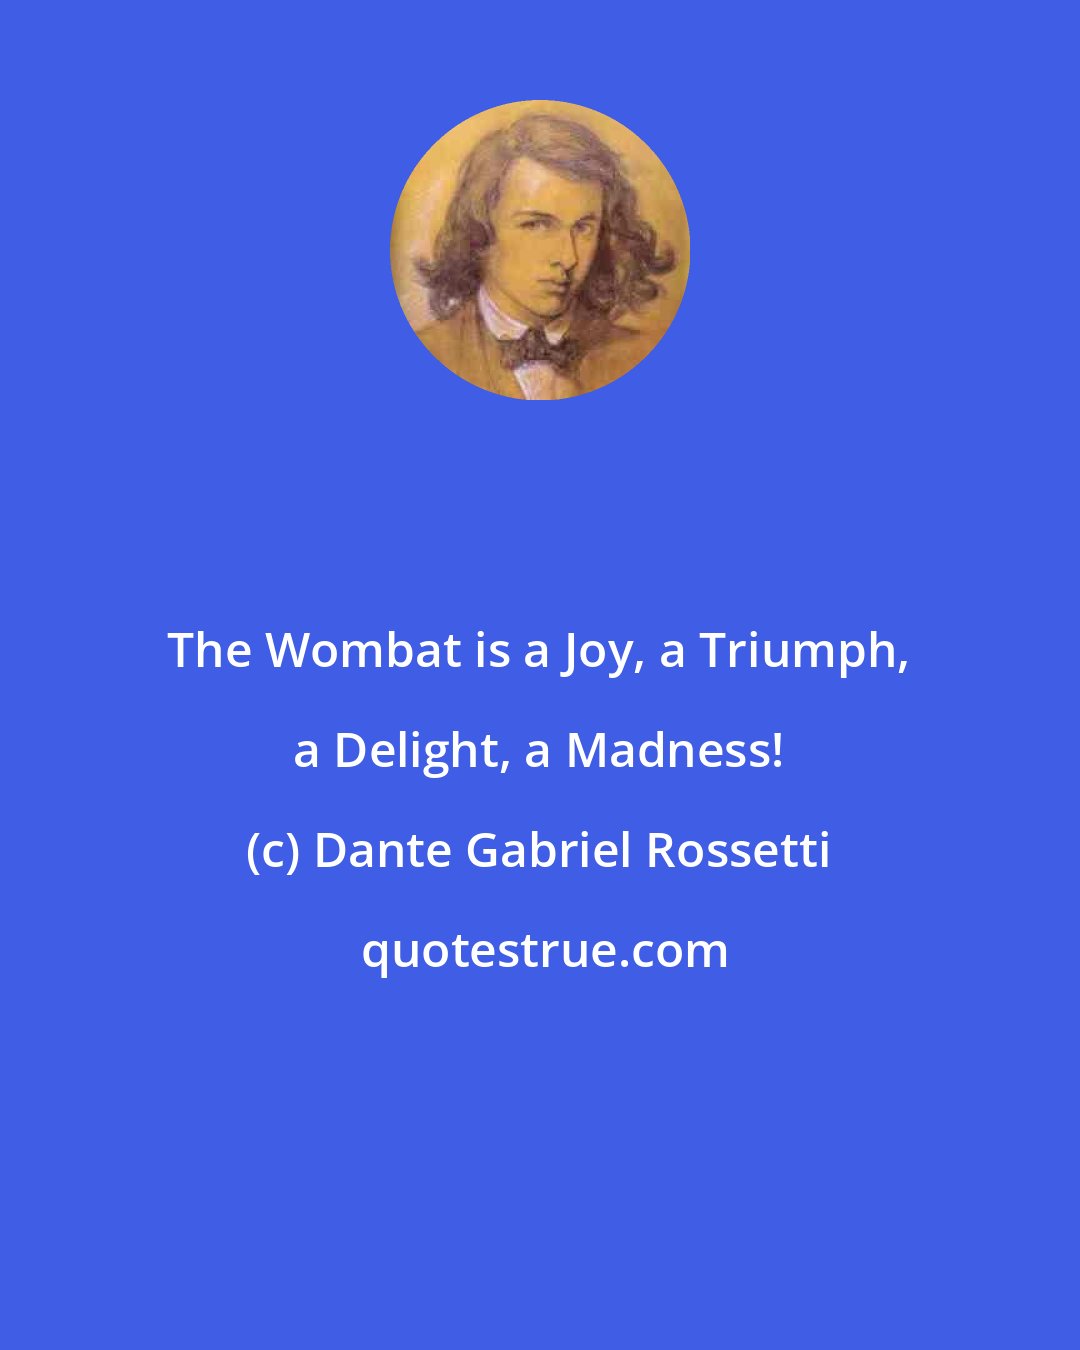 Dante Gabriel Rossetti: The Wombat is a Joy, a Triumph, a Delight, a Madness!